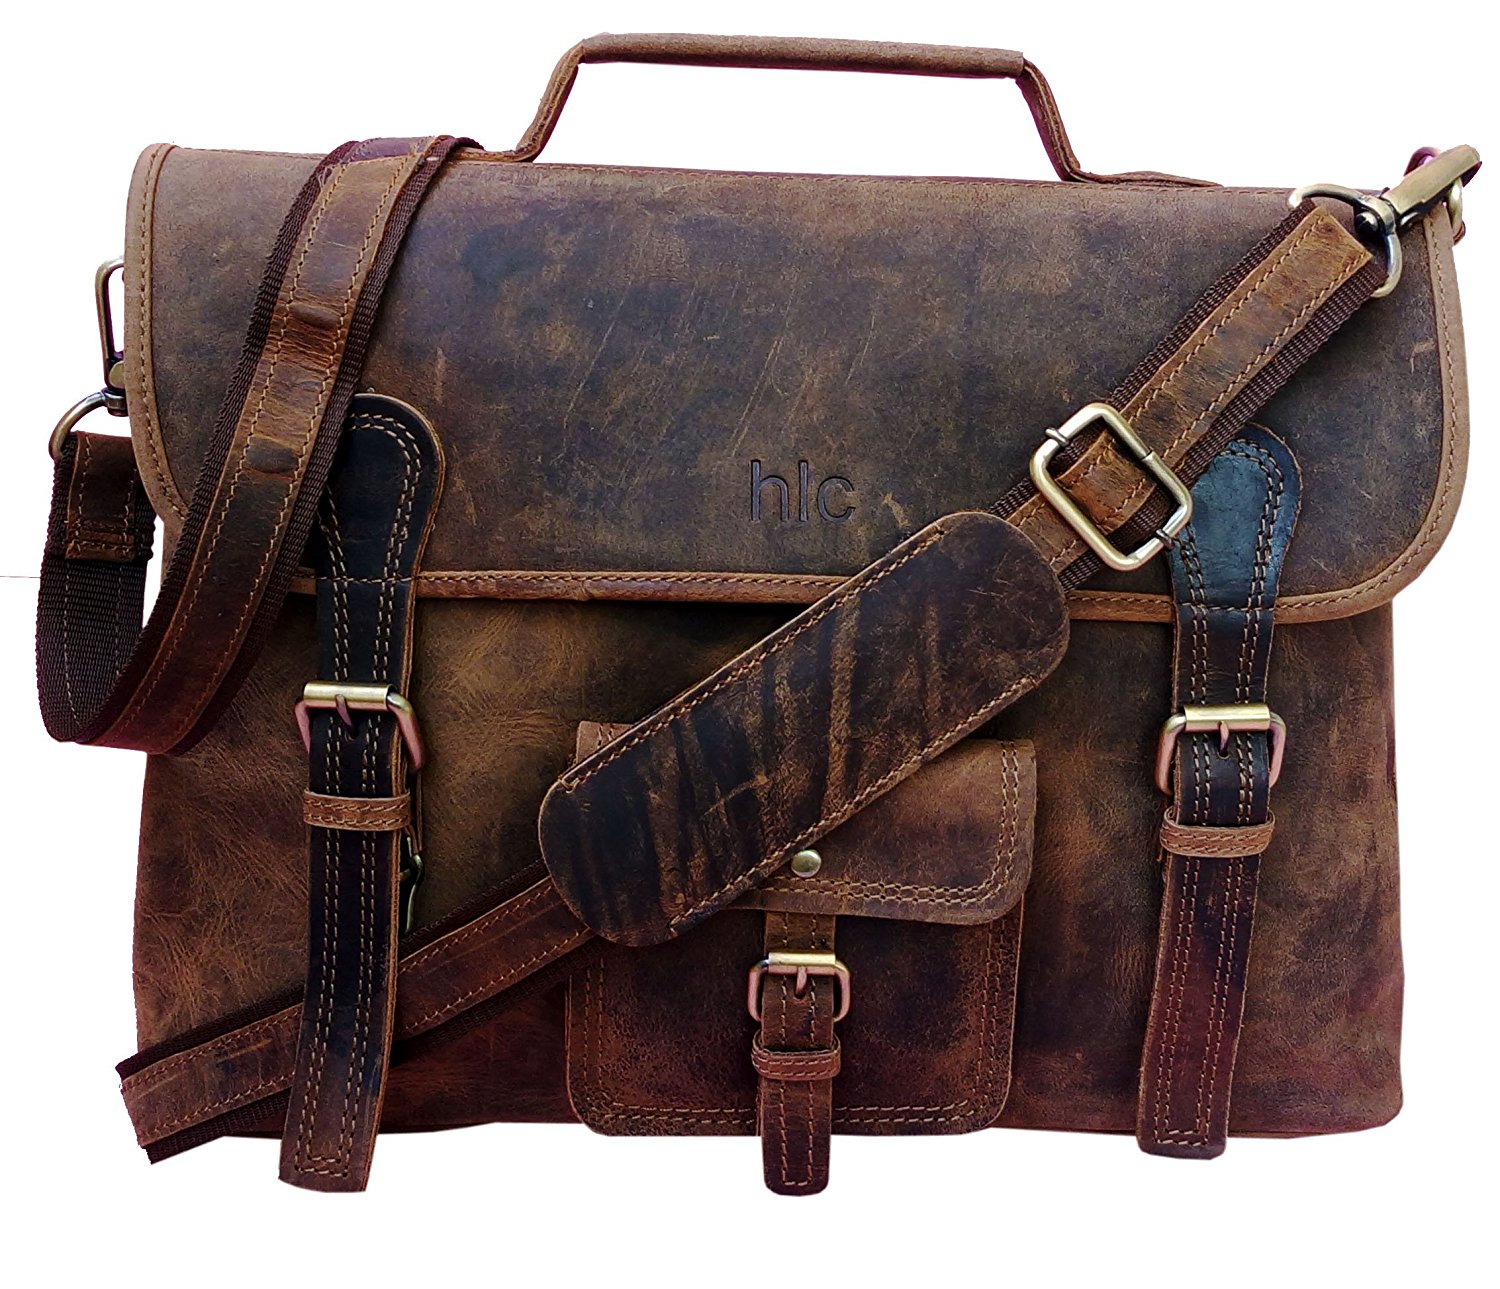 Handolederco Leather Laptop Bag, best leather camera bags, leather bags for camera, leather camera backpack